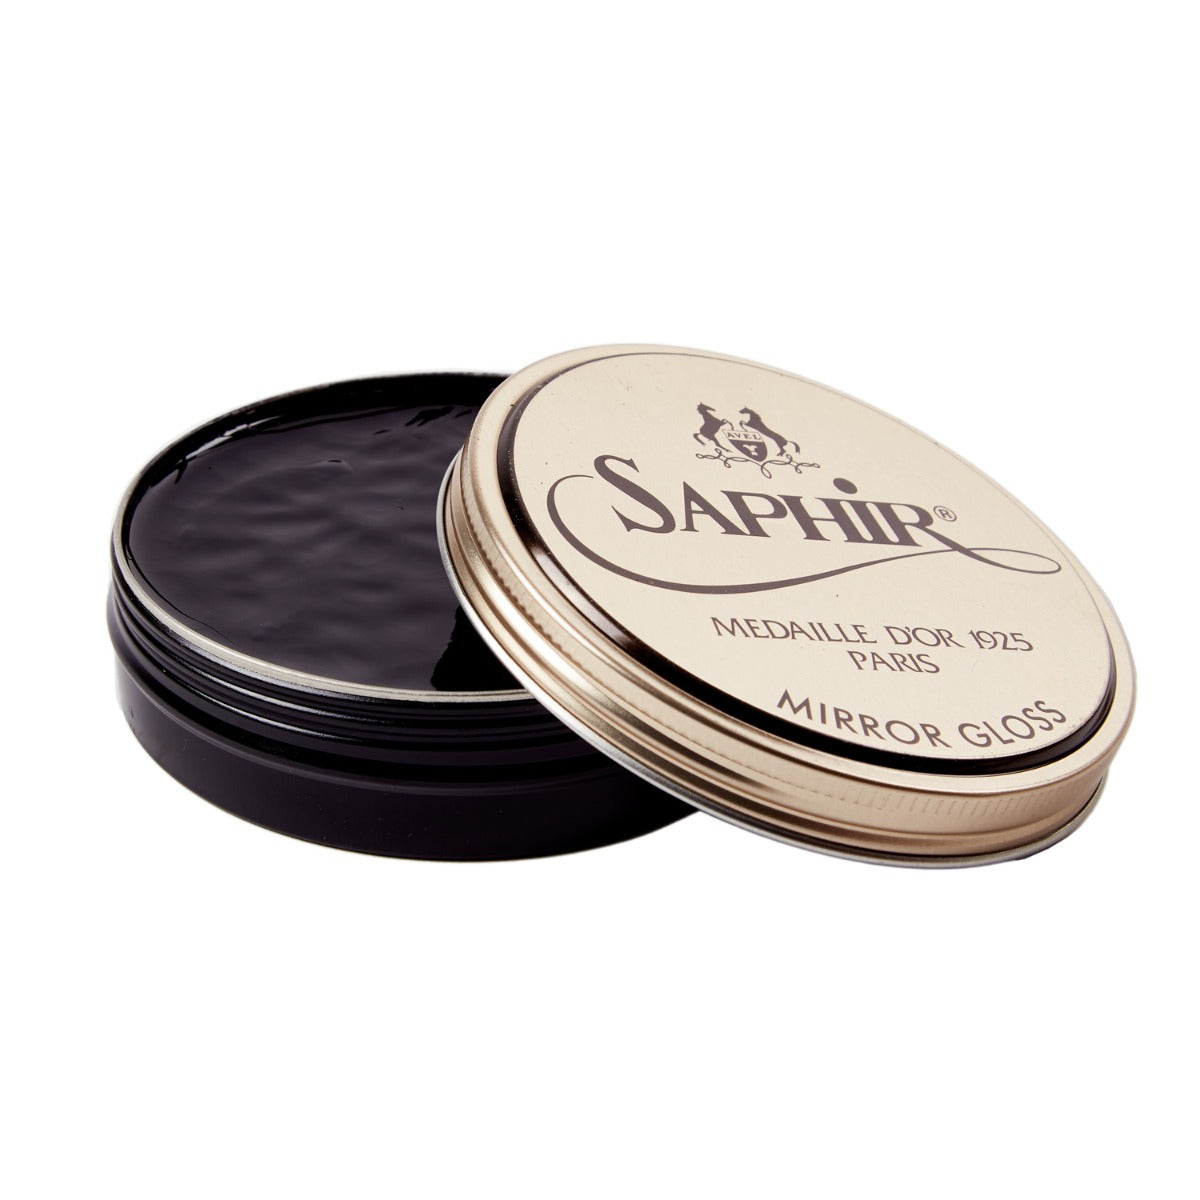 A tin with a black lid and a black Saphir Mirror Gloss Wax Polish tin from KirbyAllison.com.